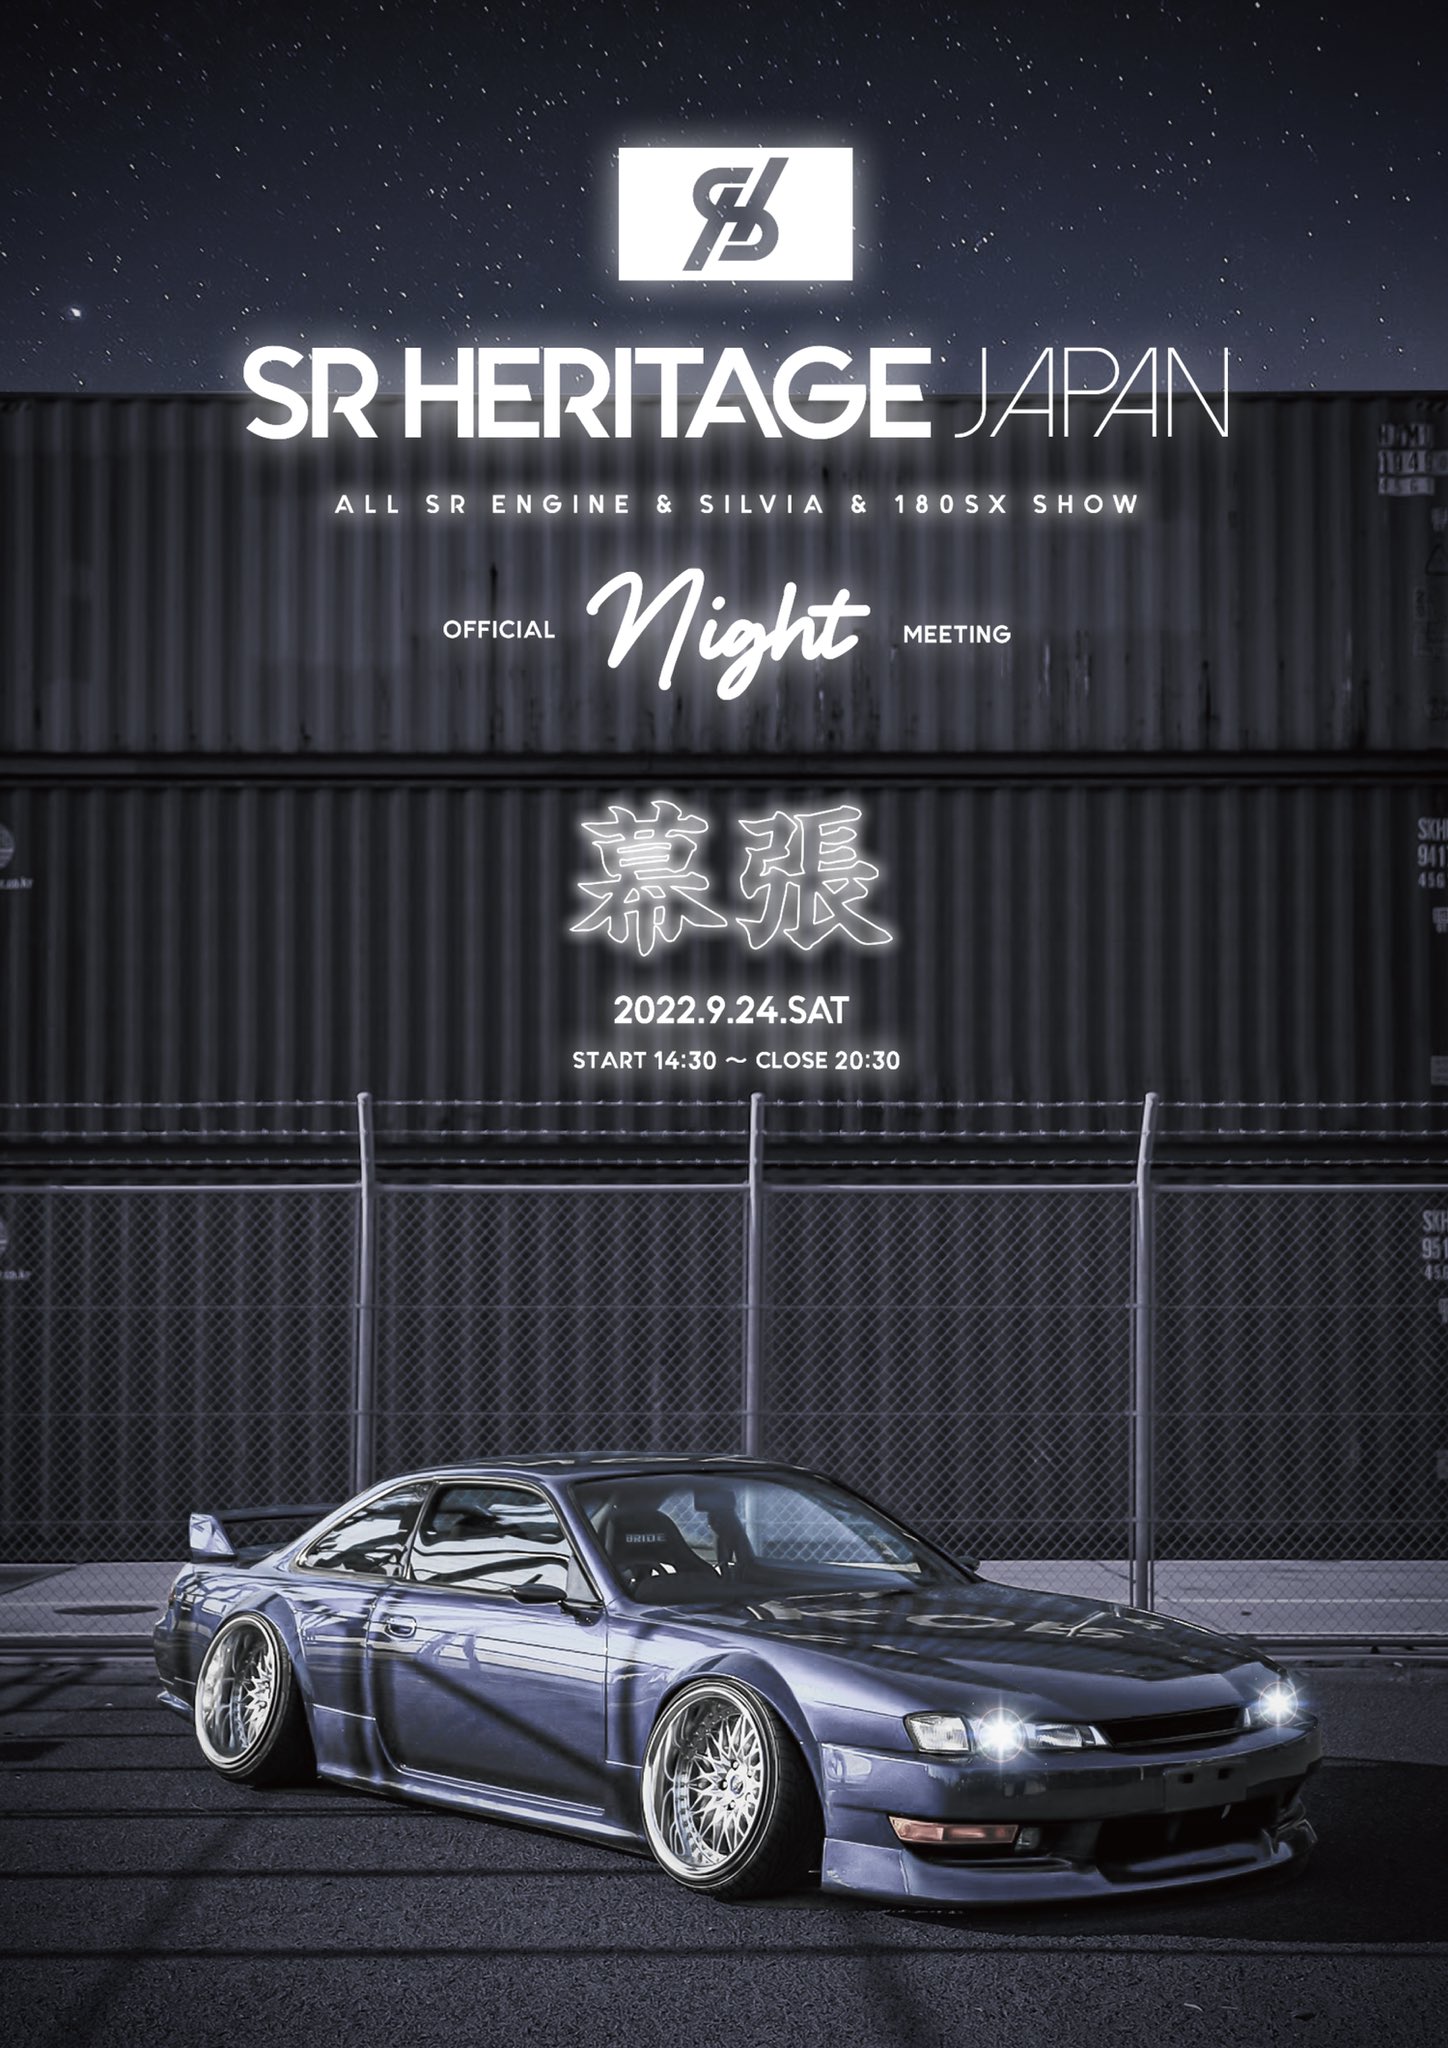 Sr Heritage Japan Night Meeting 22年9月24日 土 東京都 幕張海浜公園